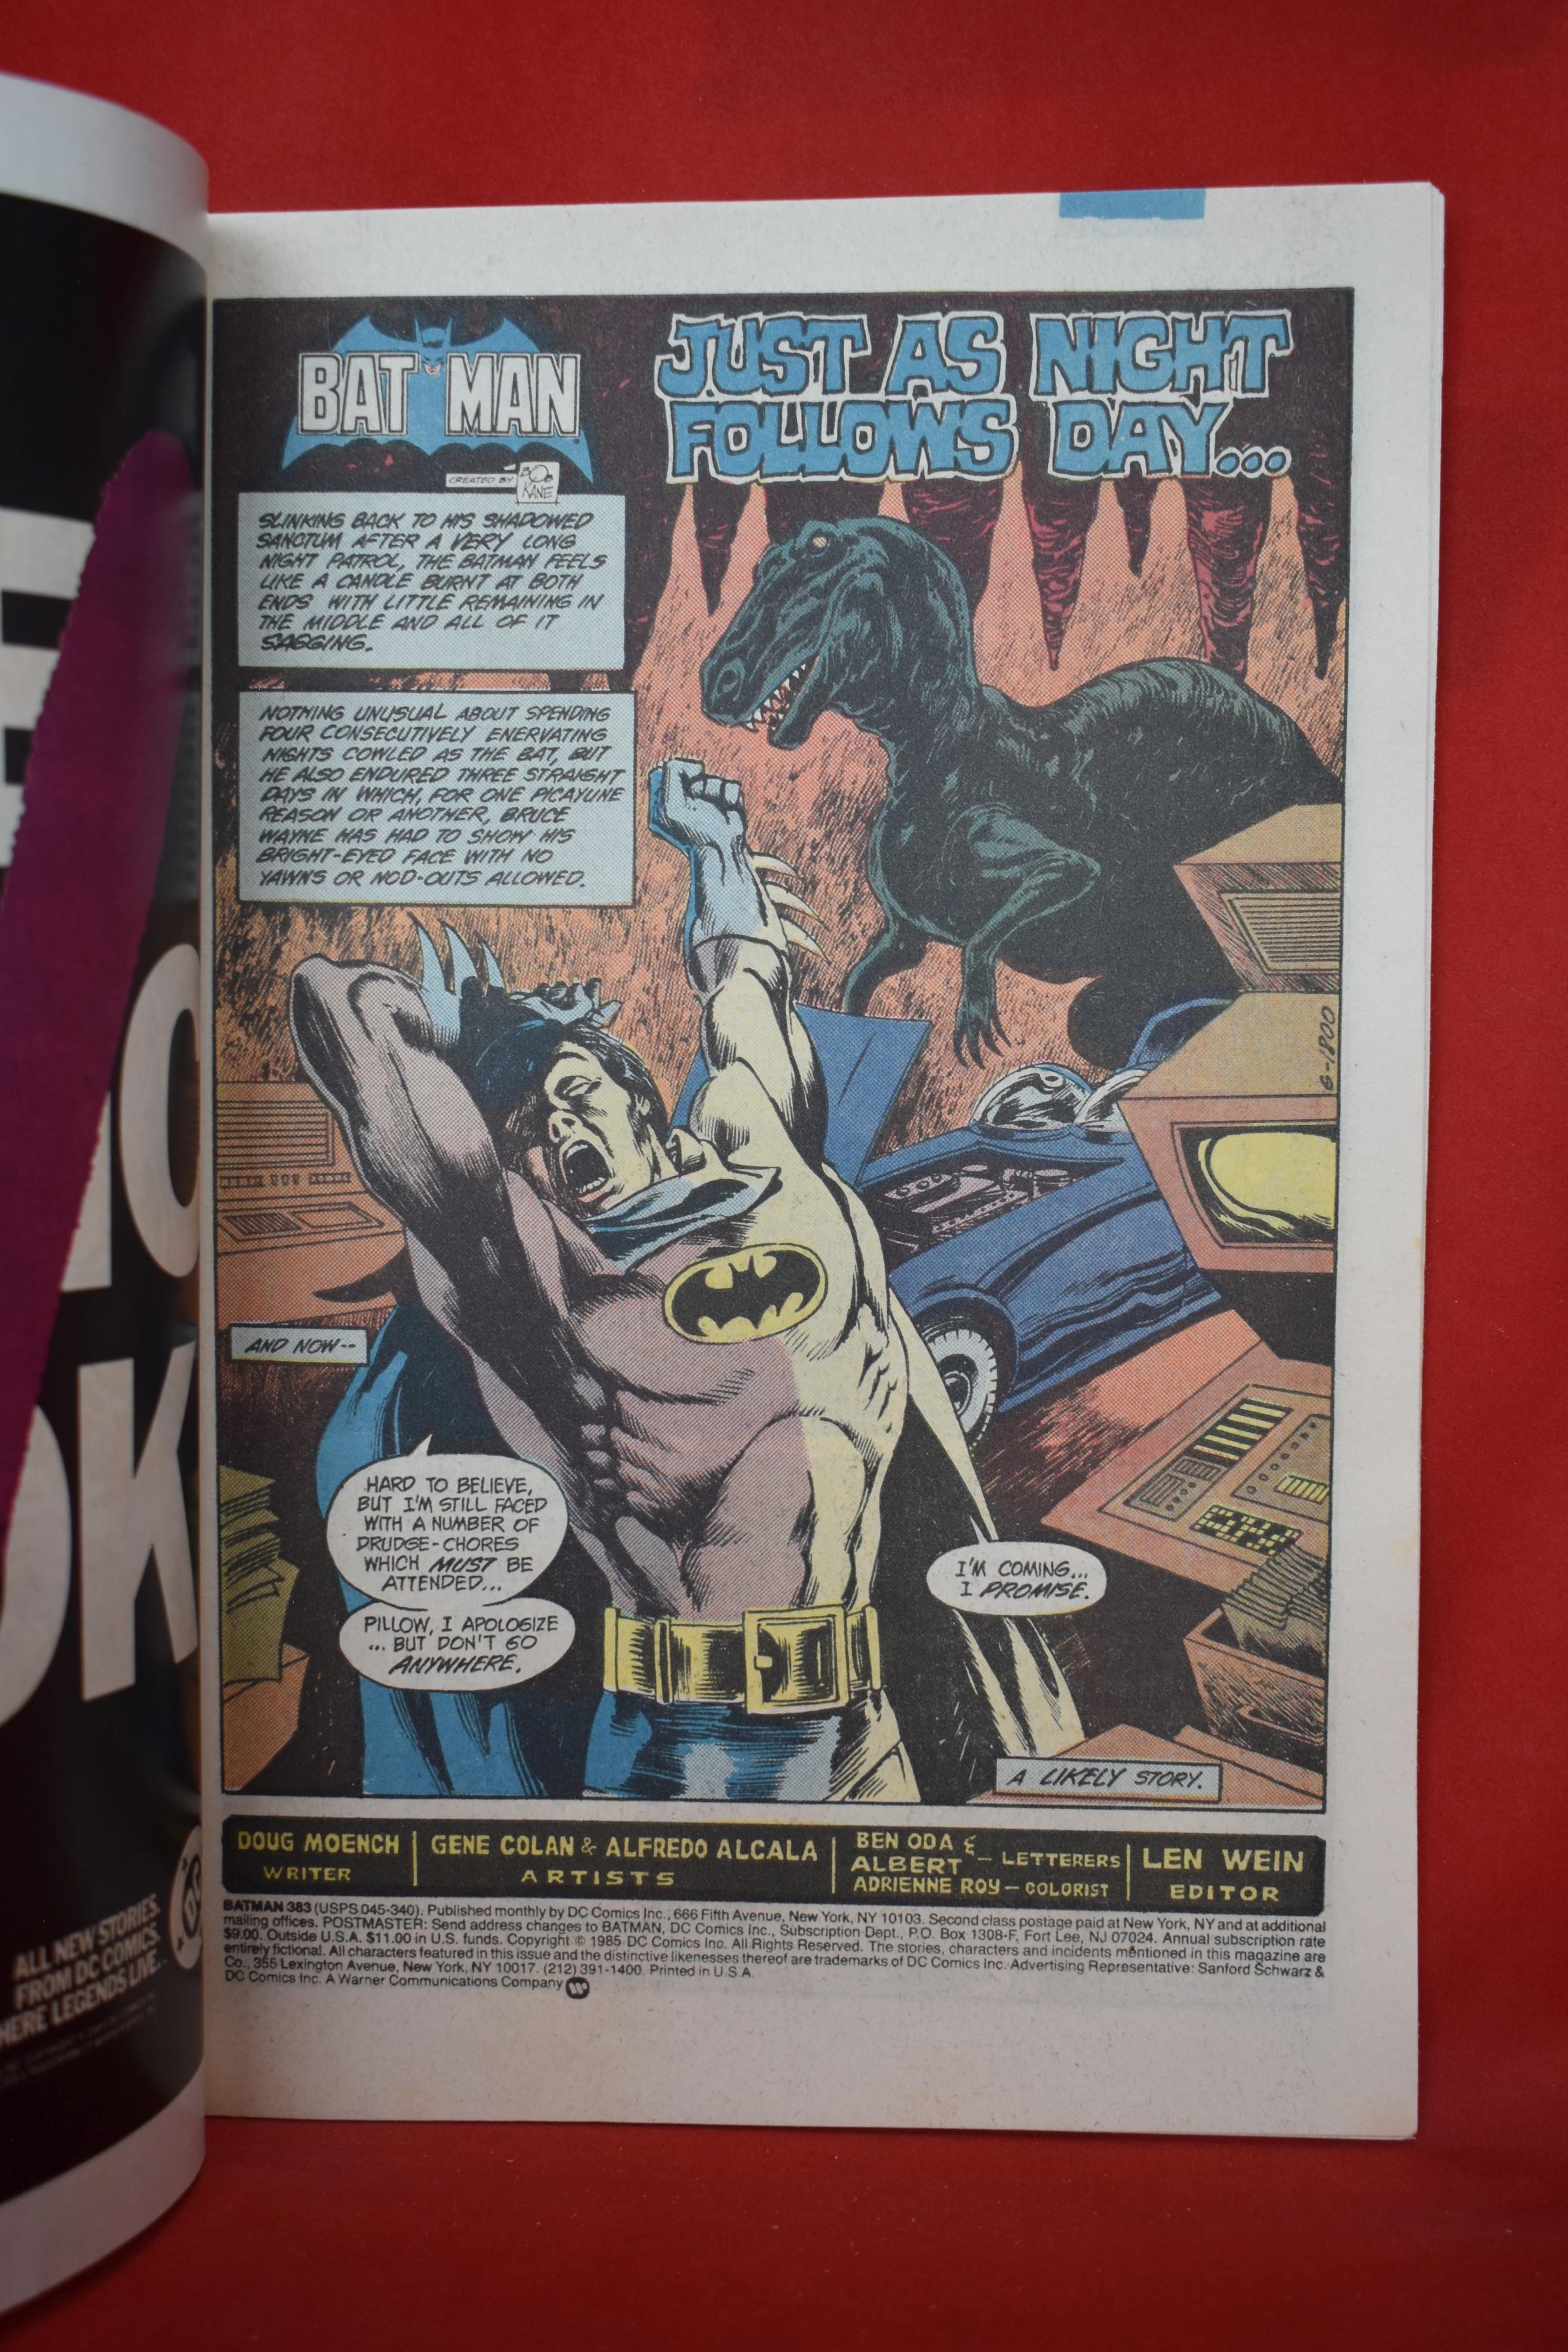 BATMAN #383 | A NIGHT IN THE LIFE OF BATMAN! | GENE COLAN & DICK GIORDANO